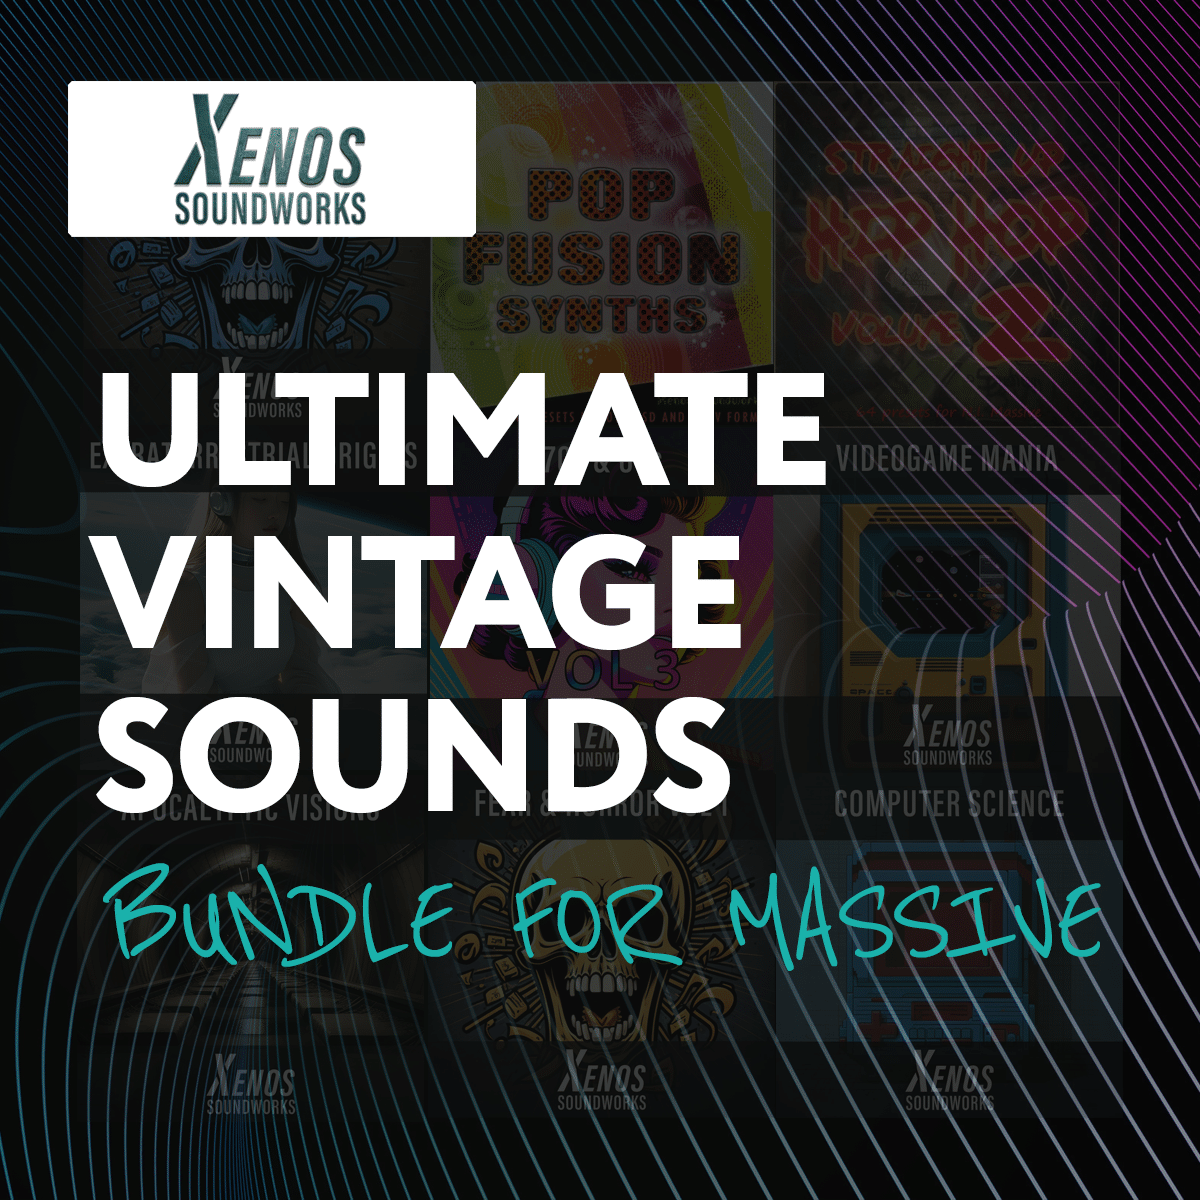 79% off “Ultimate Vintage Sounds Bundle For Massive” by Xenos Soundworks